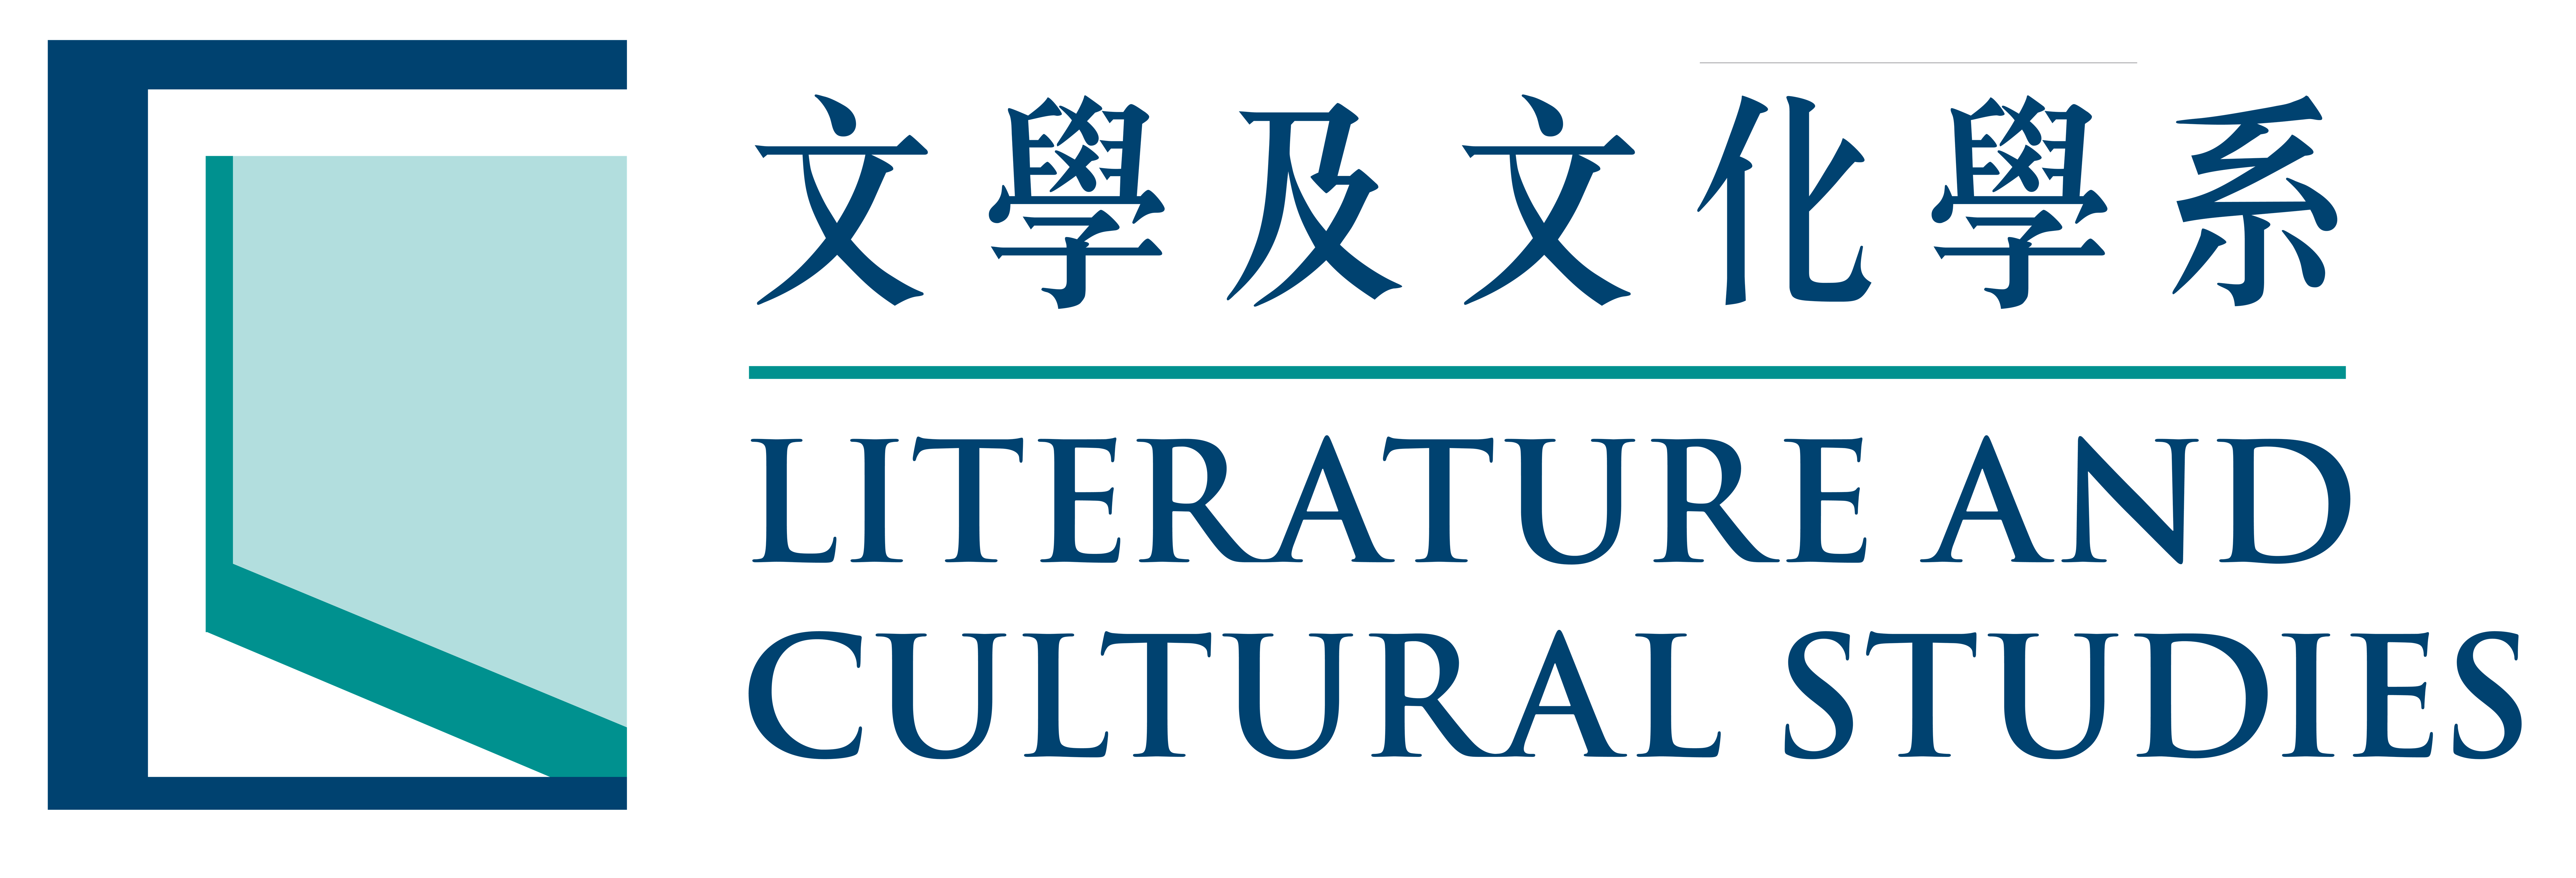 Department of Literature and Cultural Studies